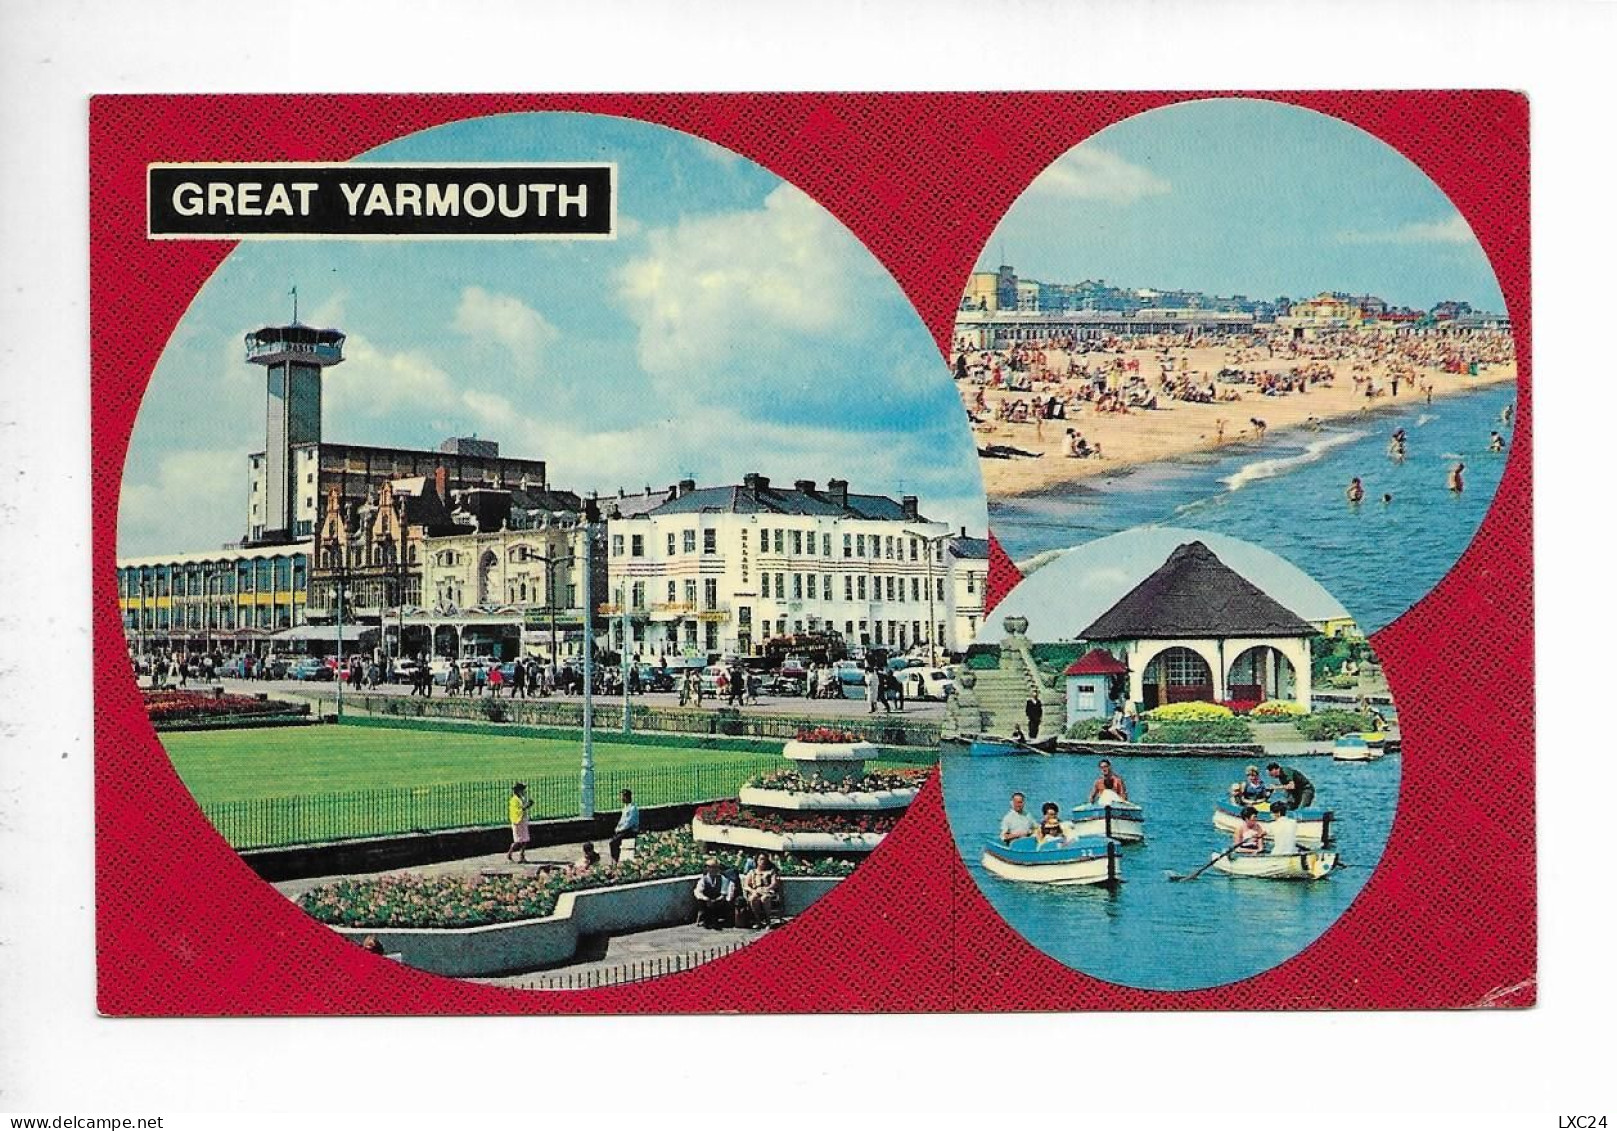 GREAT YARMOUTH. - Great Yarmouth